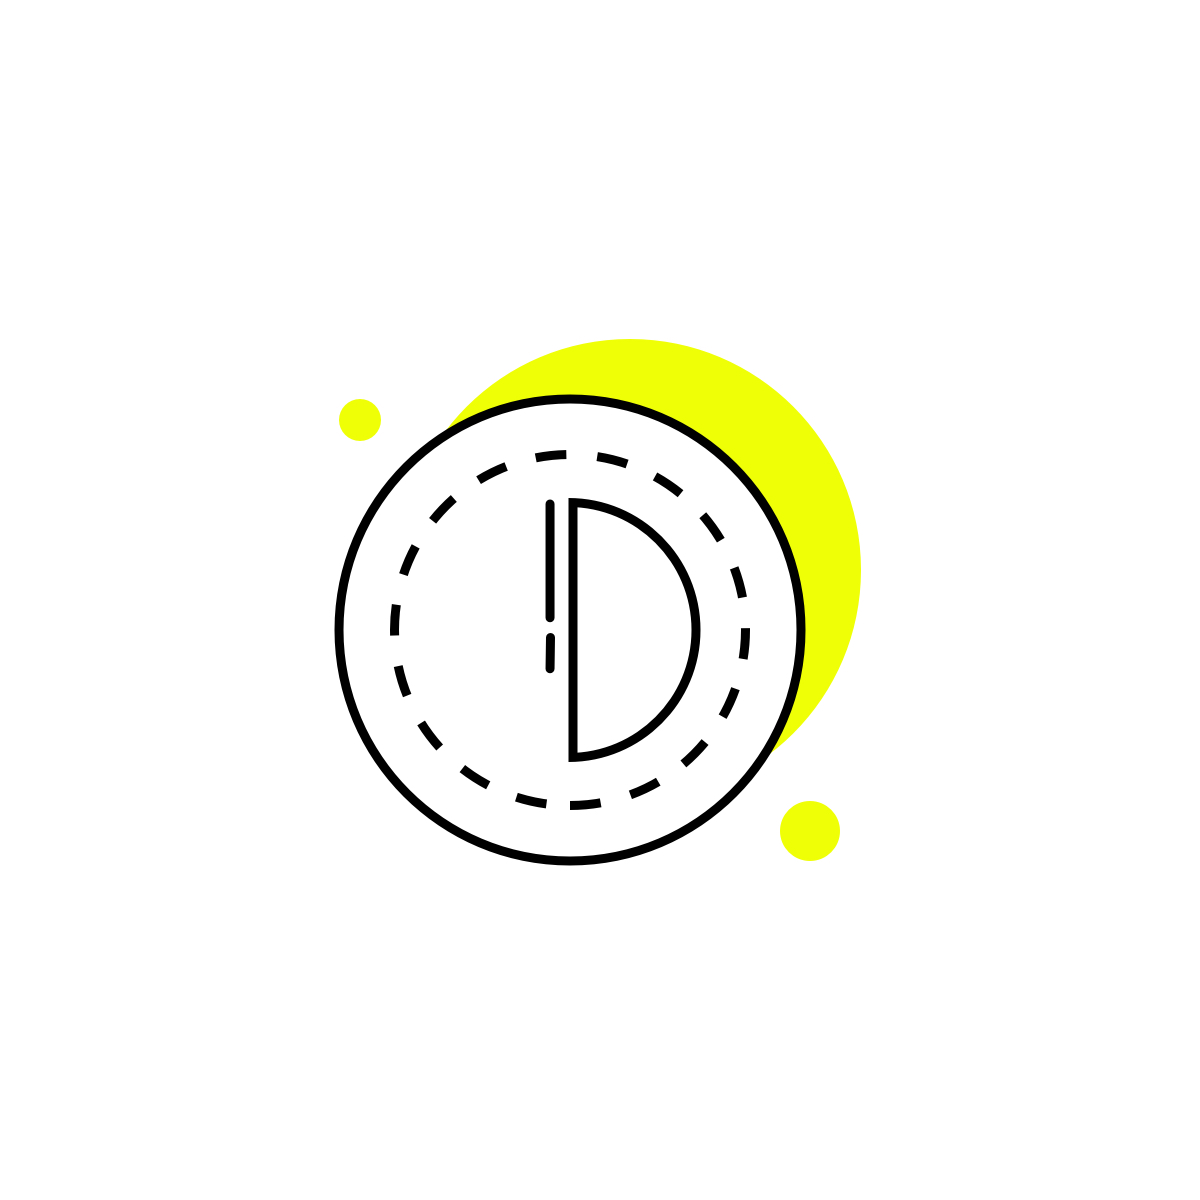 maj-lz-icon-transparence-white-new-yellow-square@3x